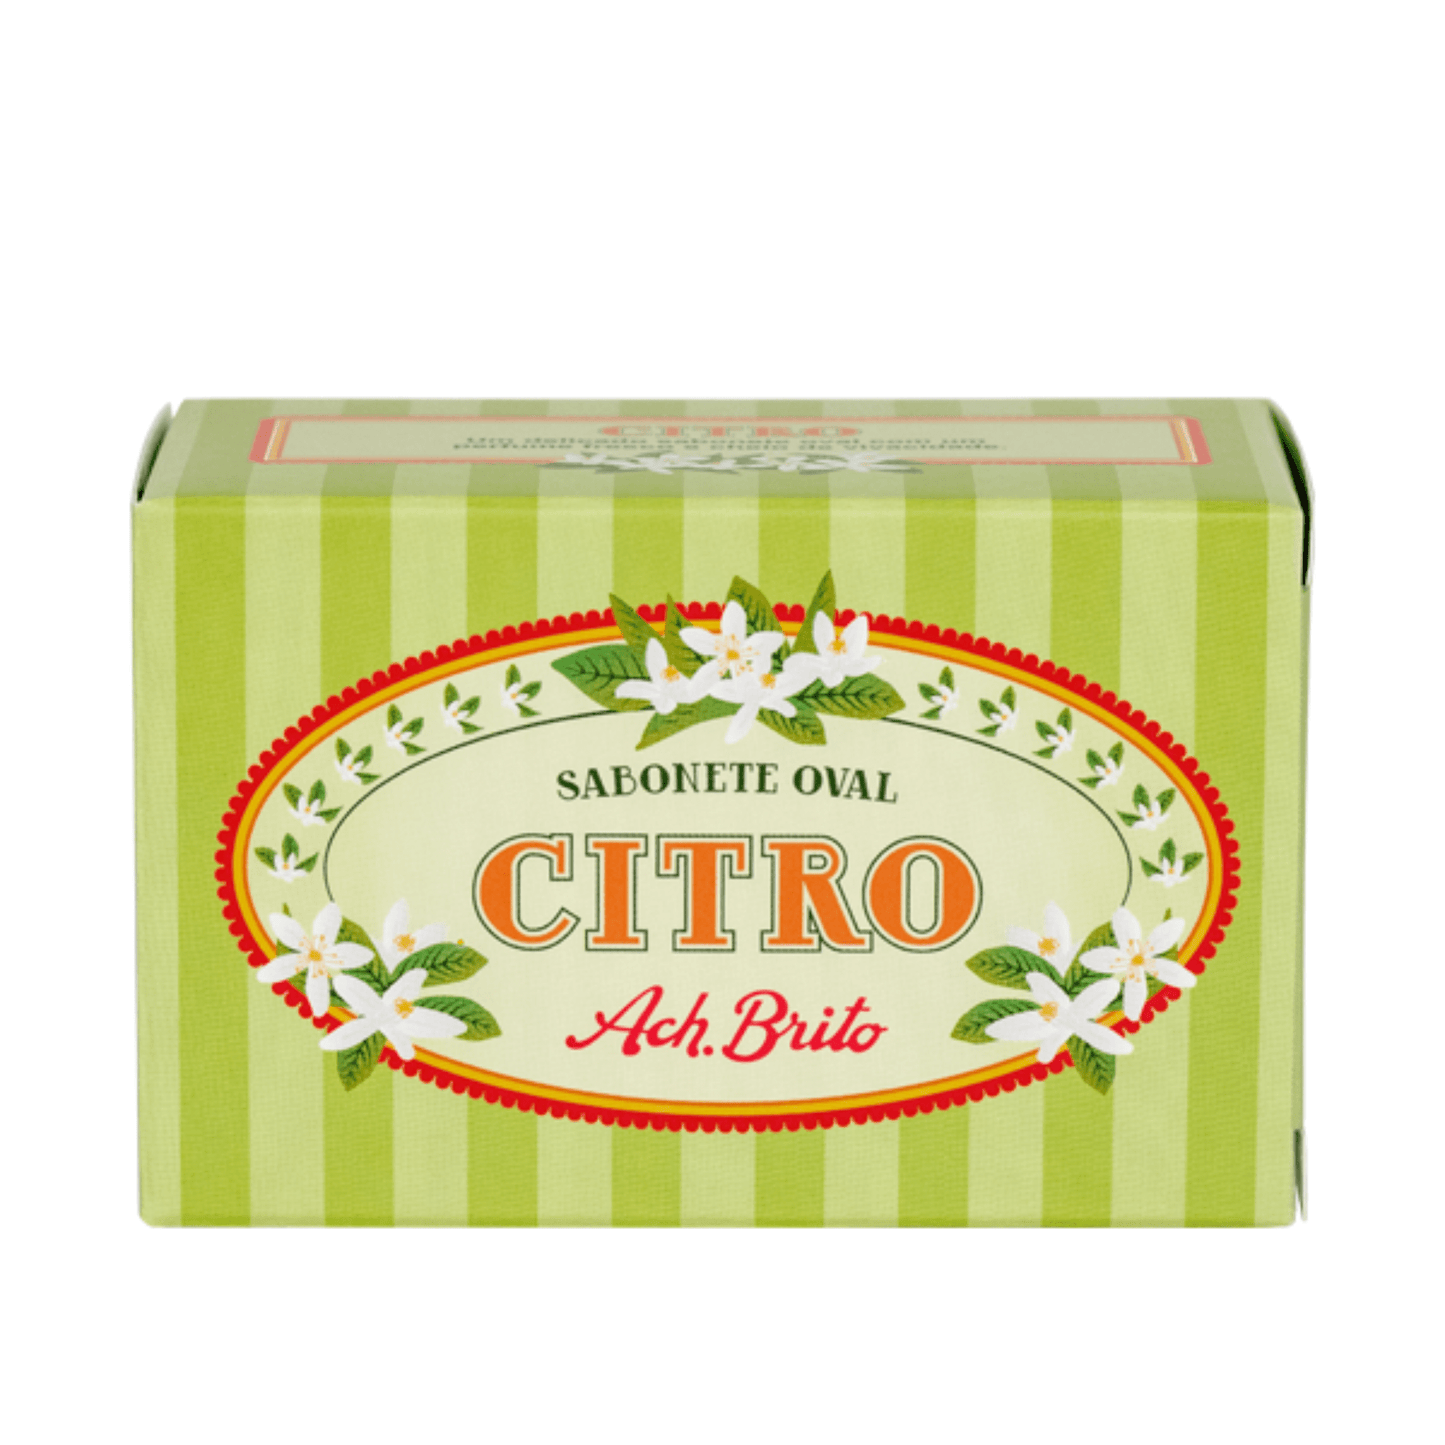 Primary Image of Citro (Citrus) Soap